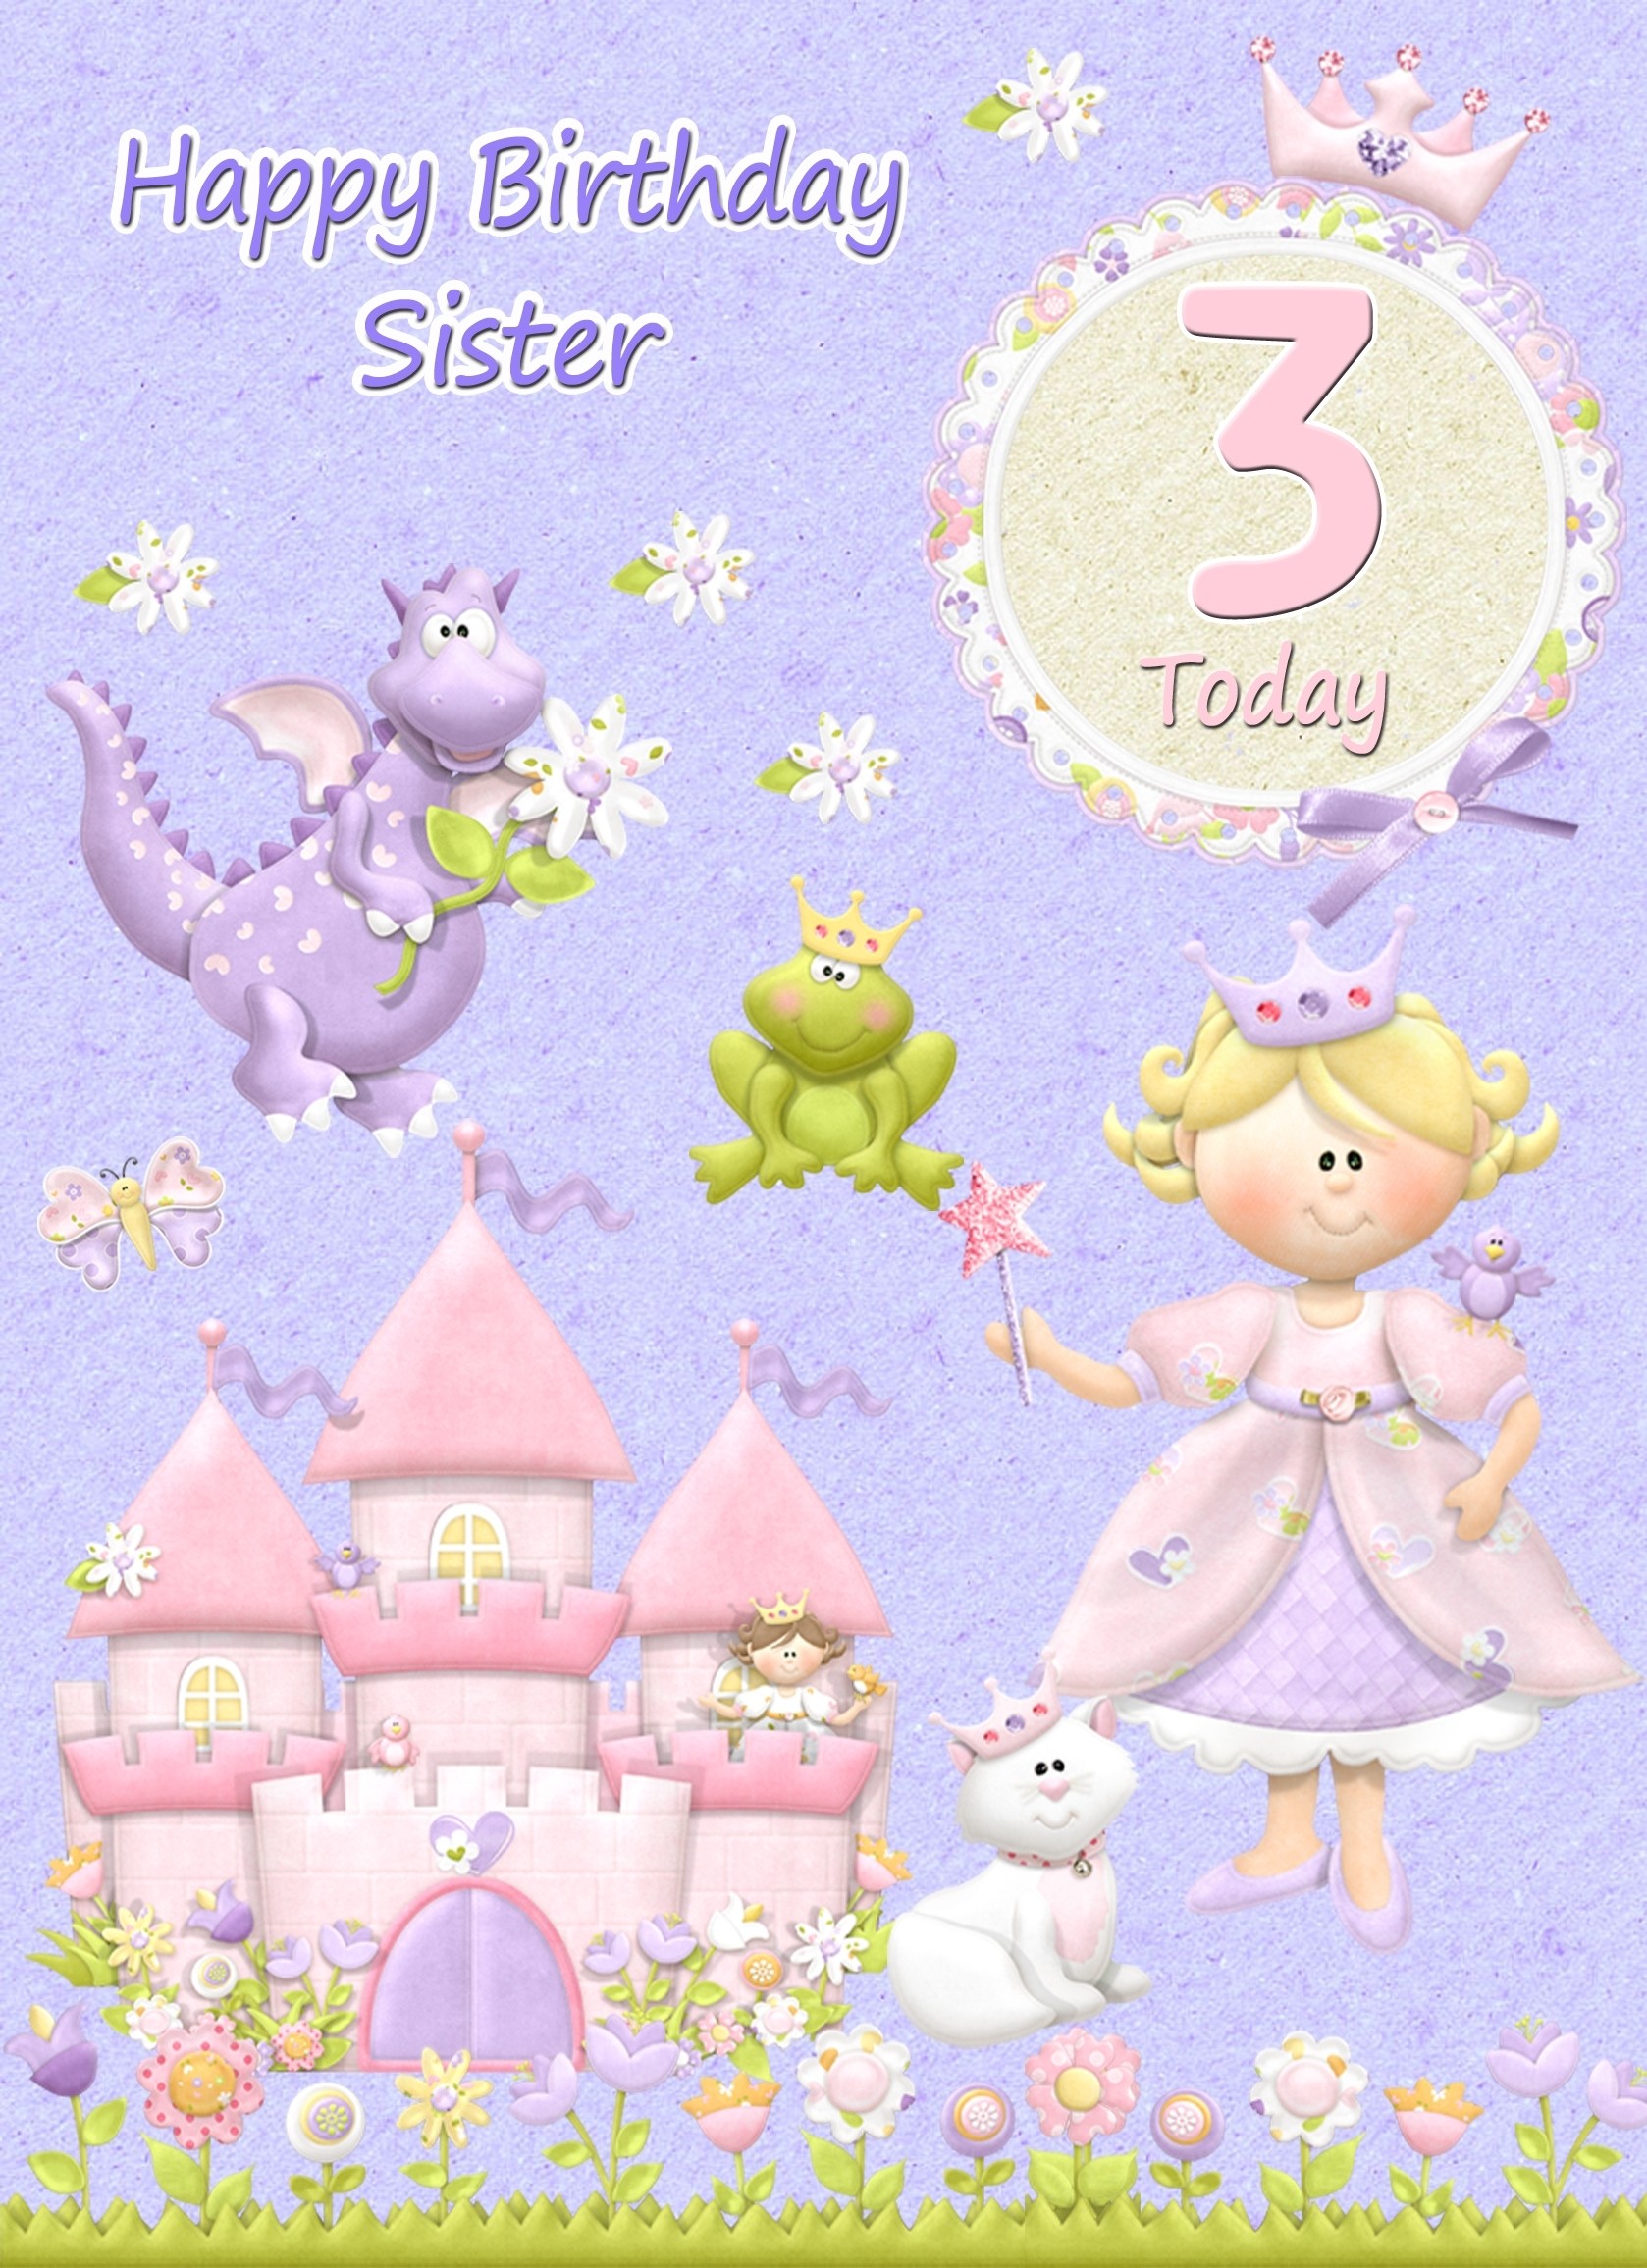 Kids 3rd Birthday Princess Cartoon Card for Sister